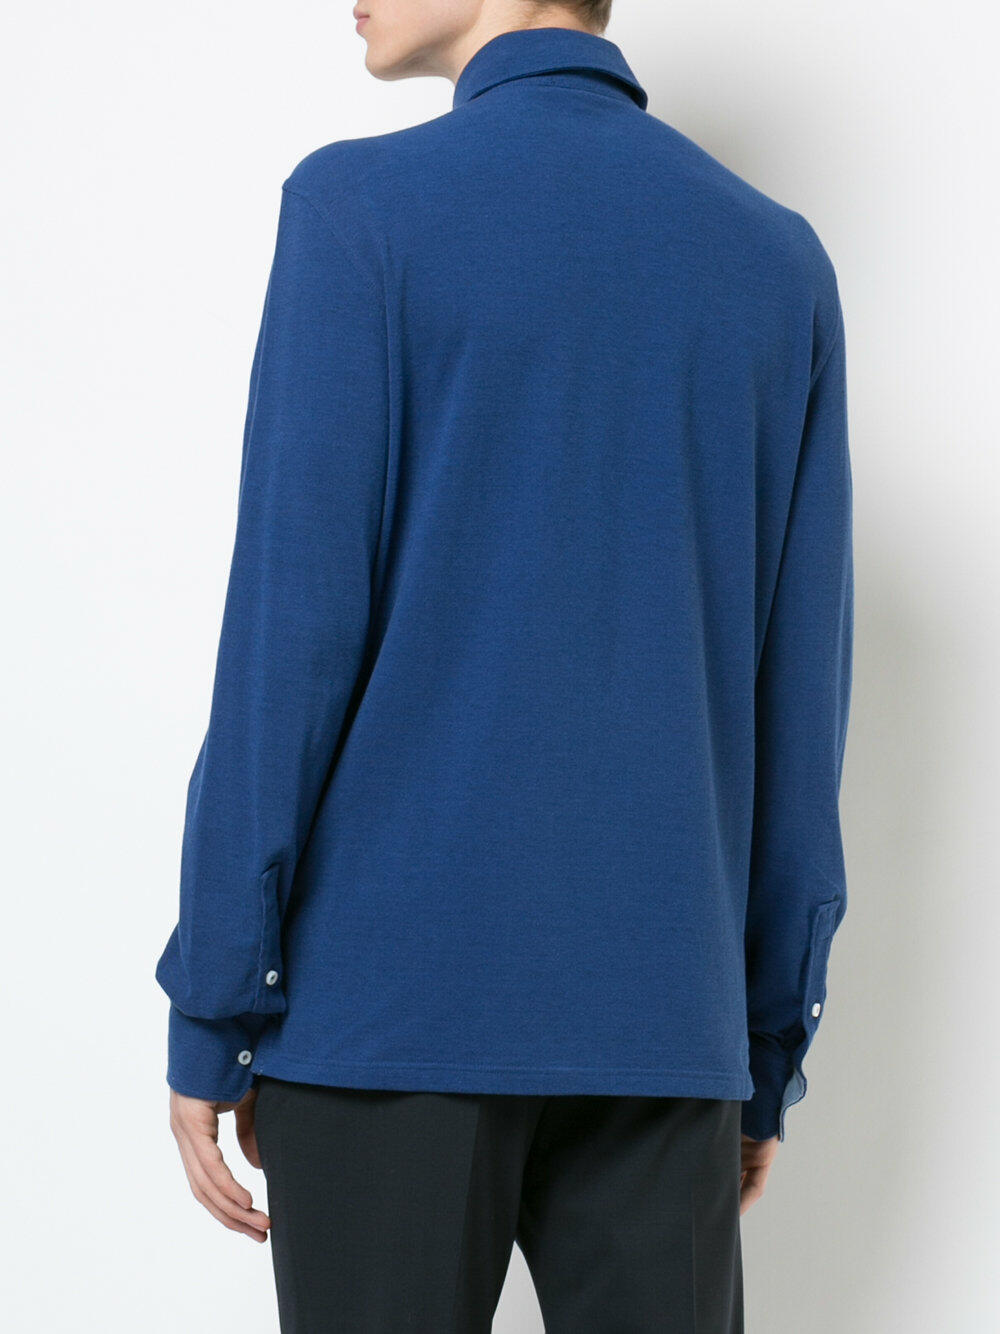 Isaia - Navy Blue Knit Sport Shirt | Mitchell Stores